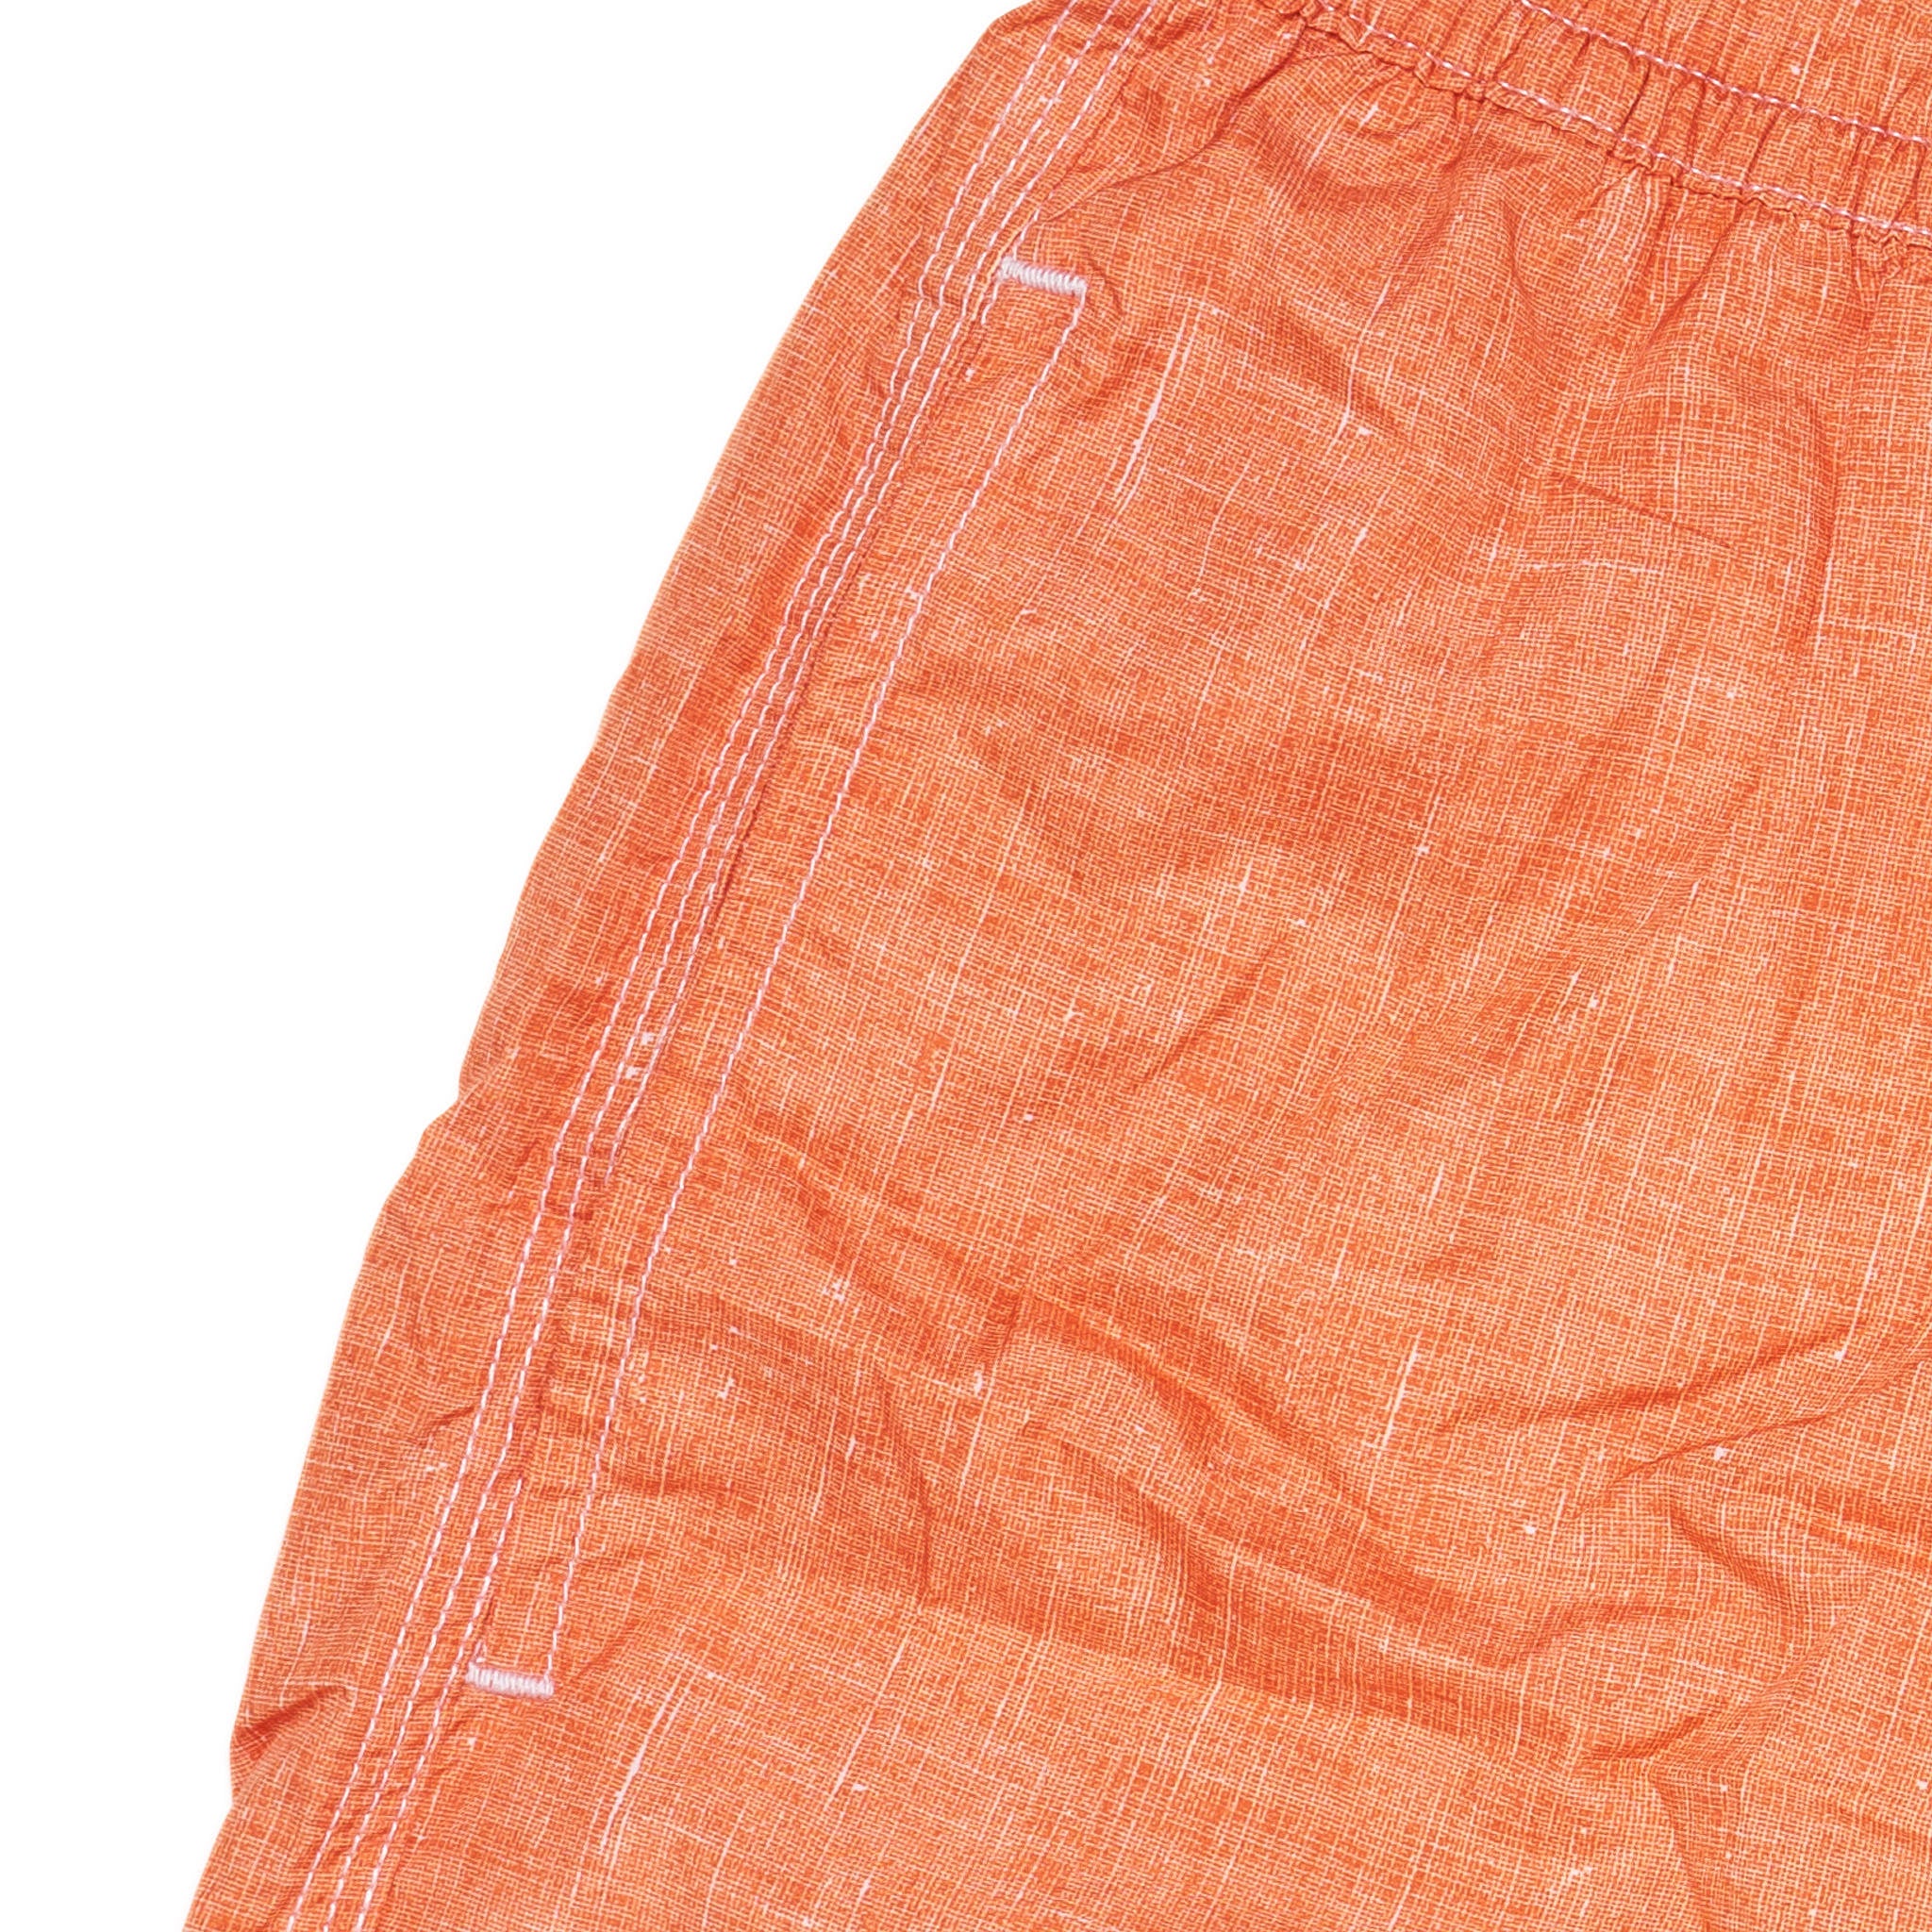 FEDELI Orange Chambray Printed Madeira Airstop Swim Shorts Trunks NEW S FEDELI